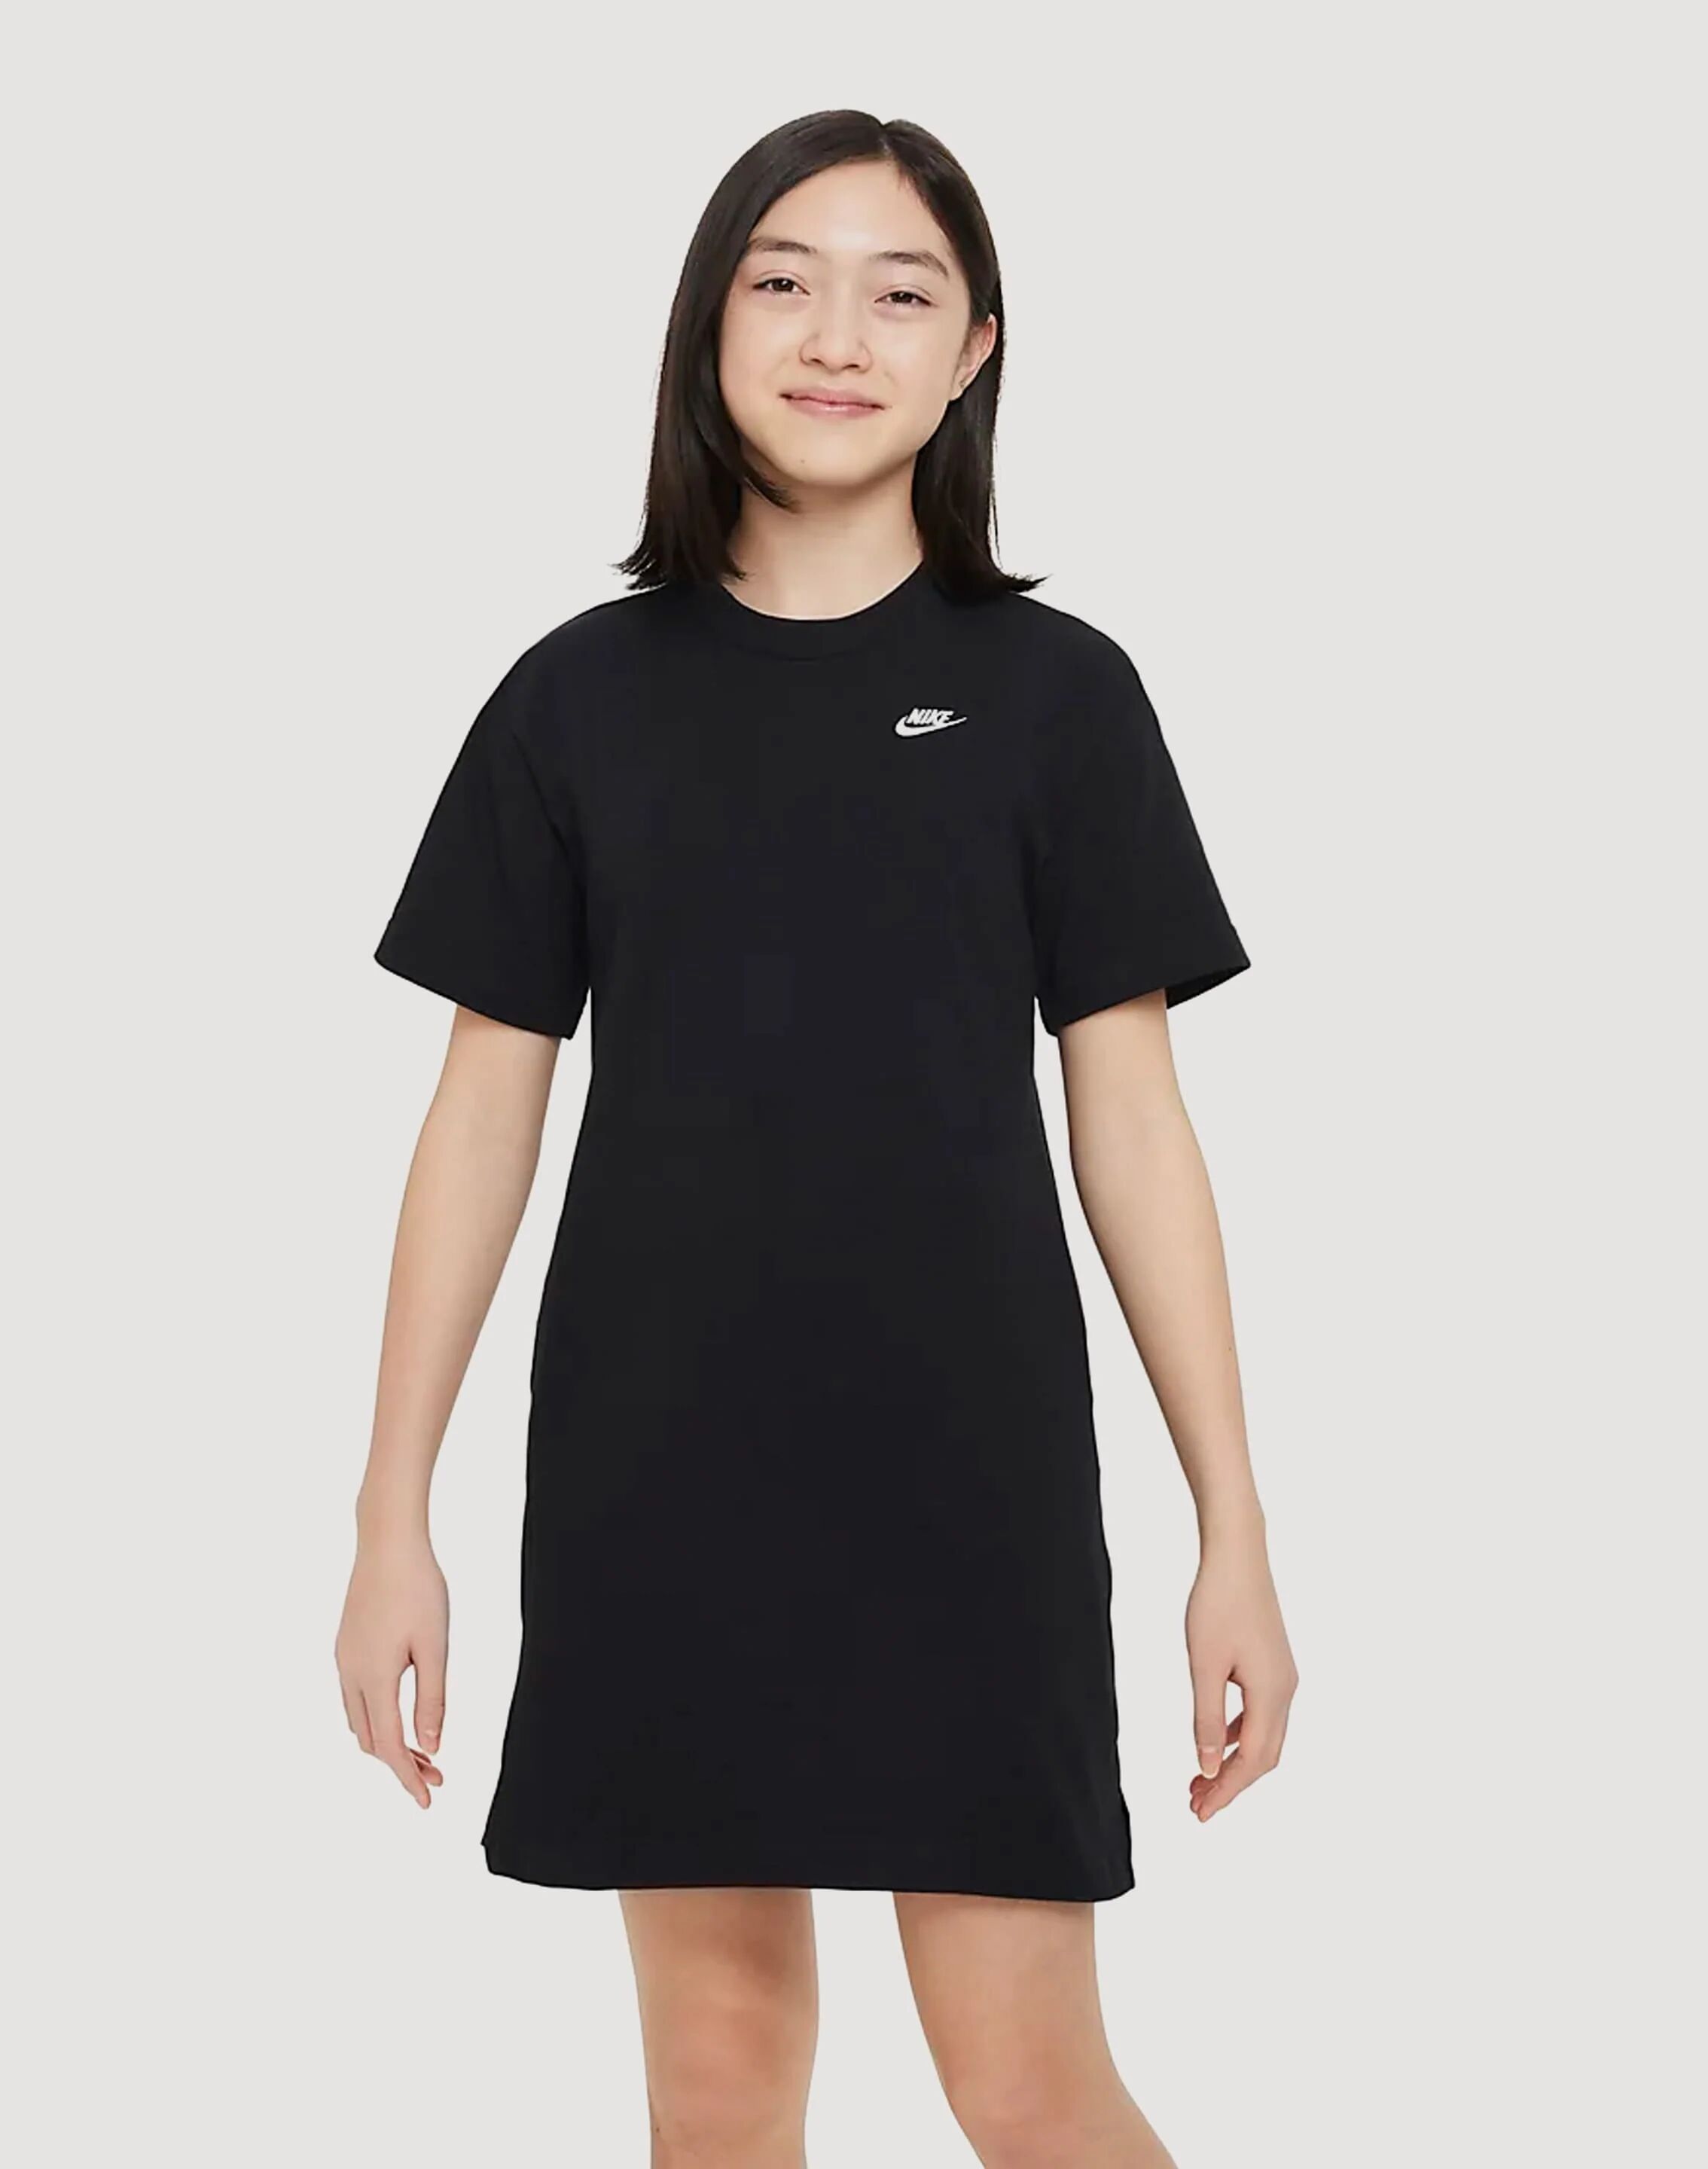 Nike T-Shirt Dress Grade-School  - Black - Size: LG